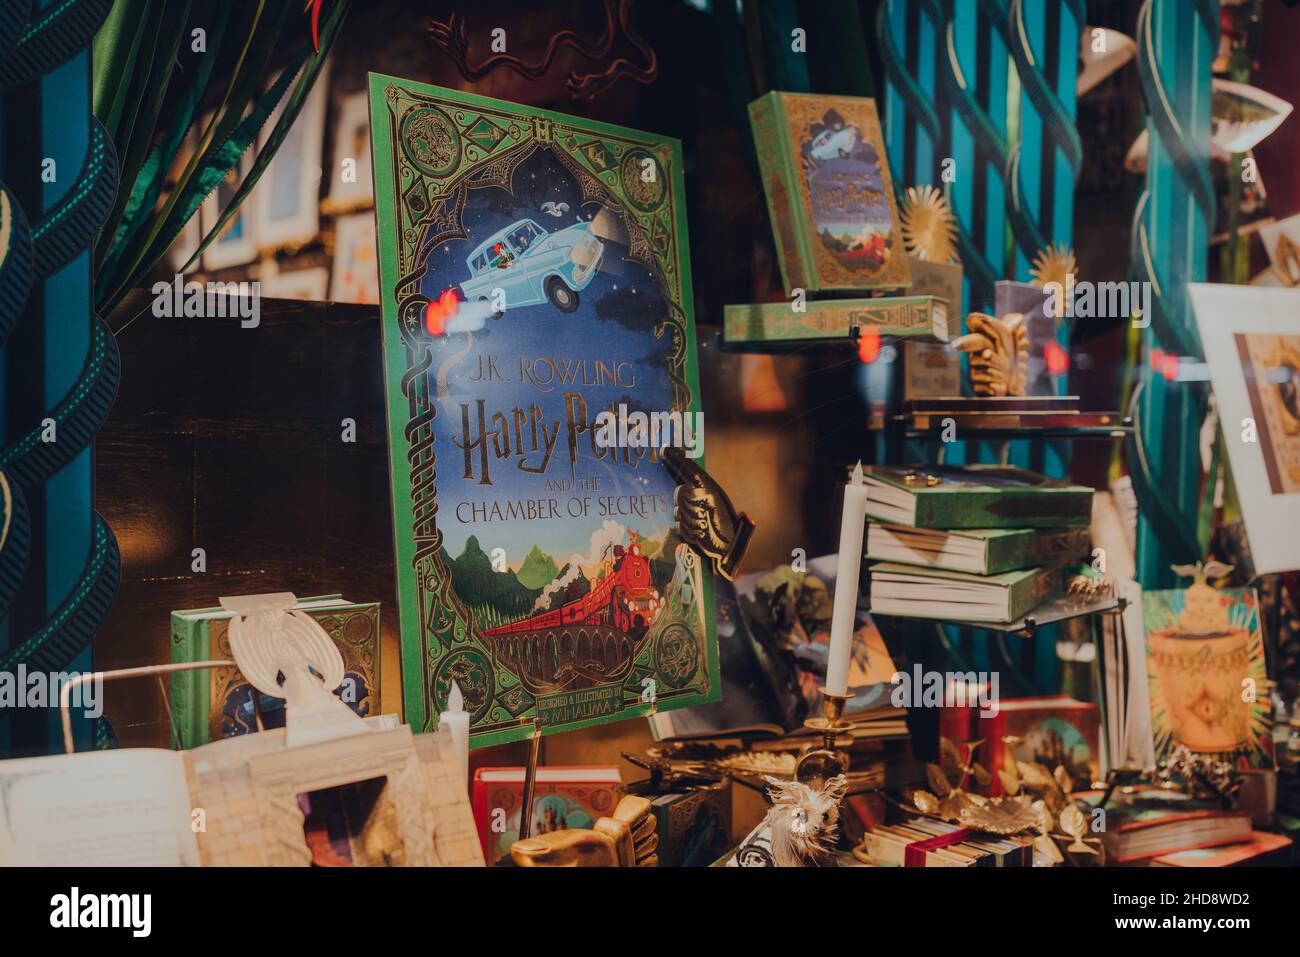 London, UK - November 23, 2021: Harry potter books in the window